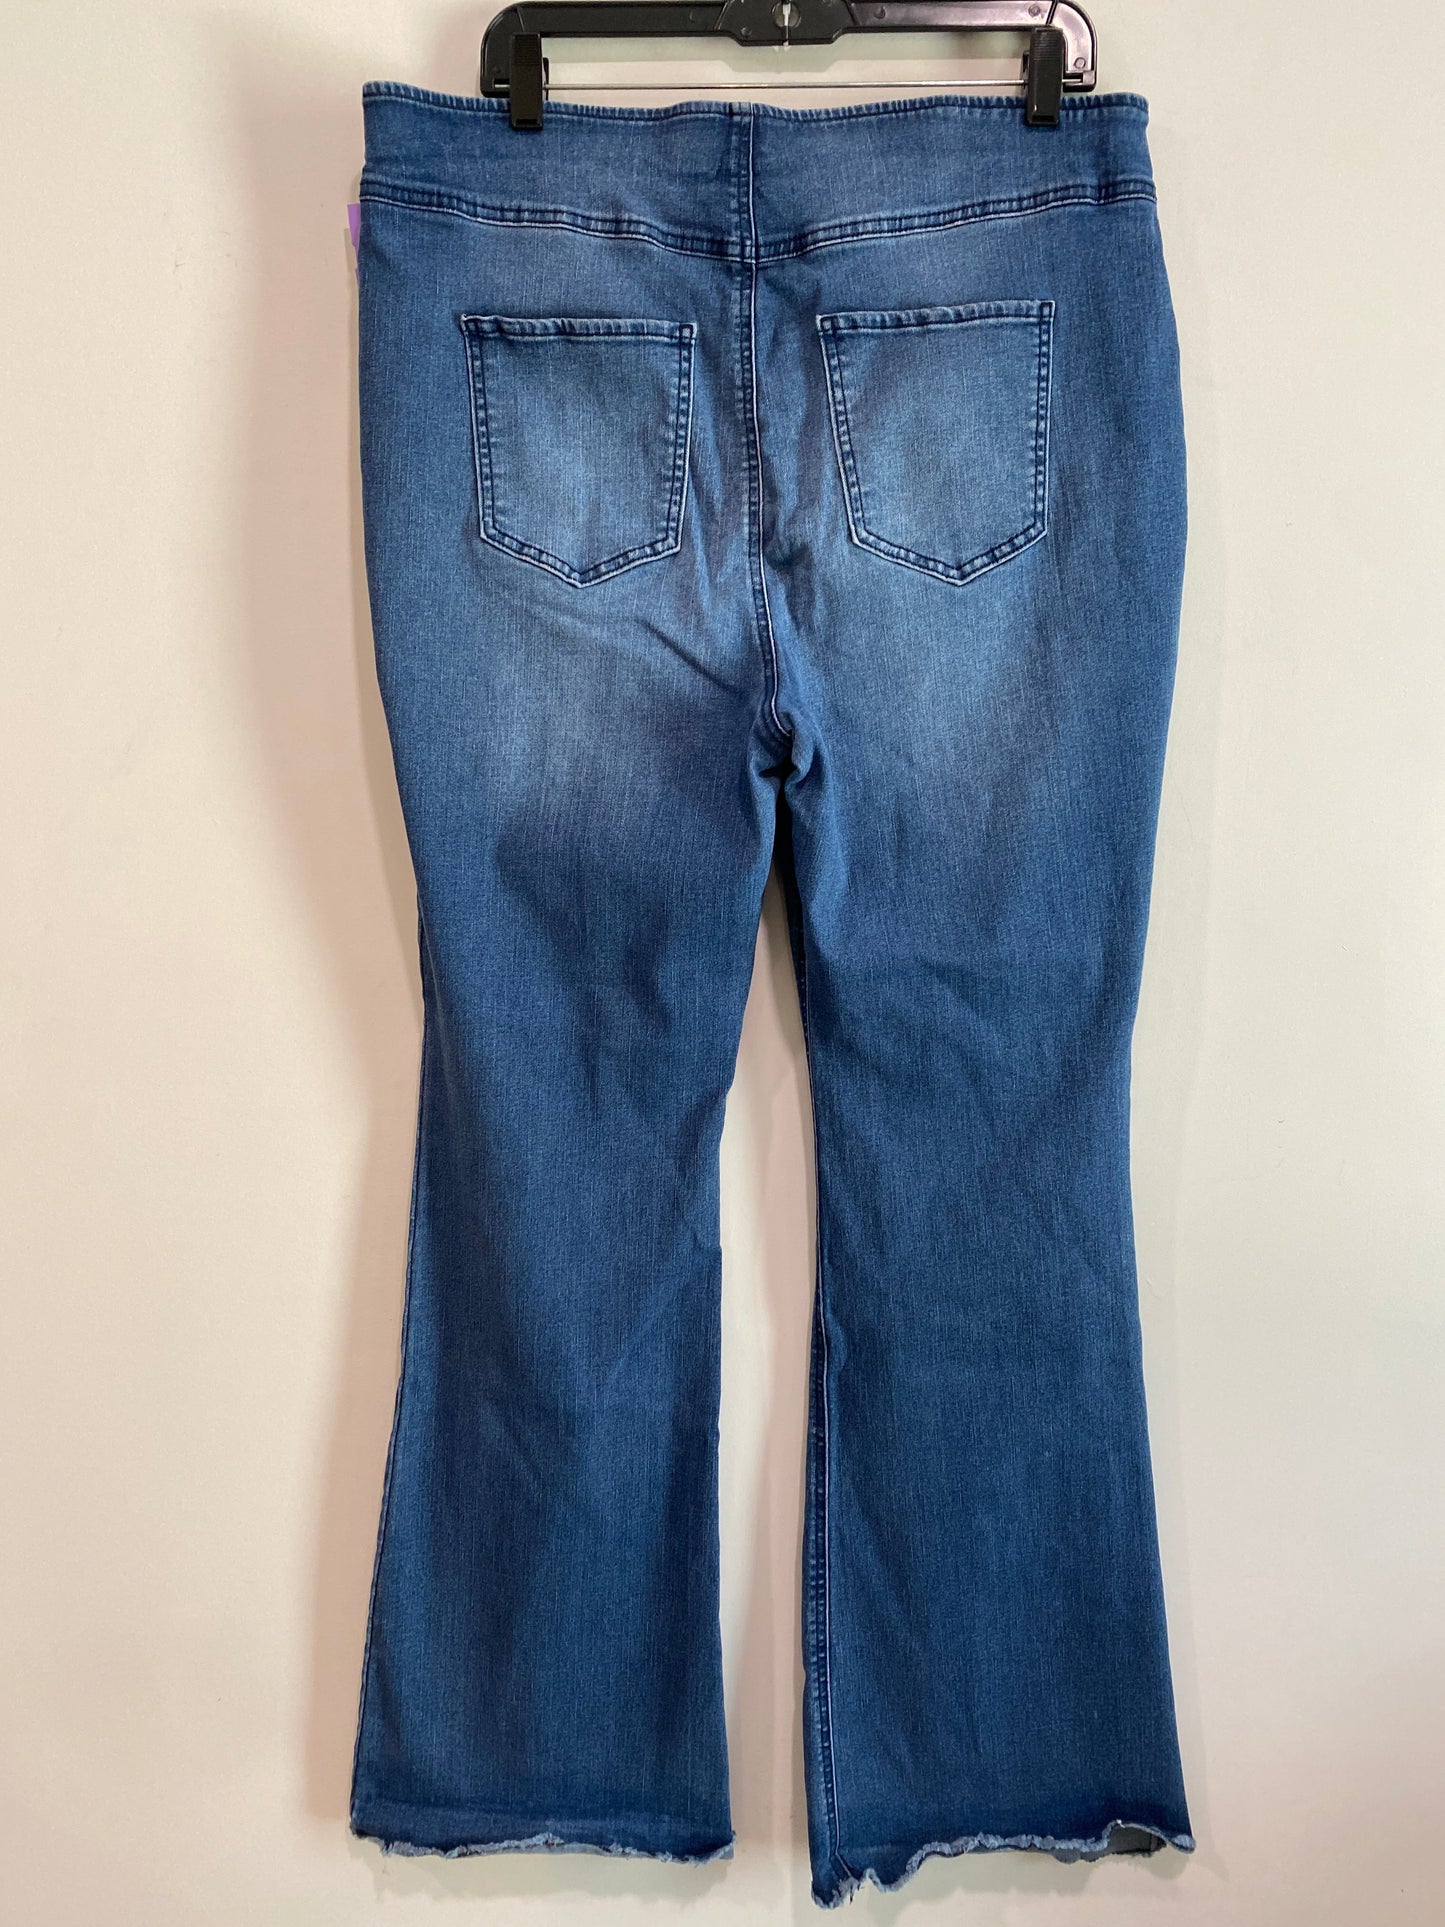 Blue Denim Jeans Jeggings Knox Rose, Size Xxl